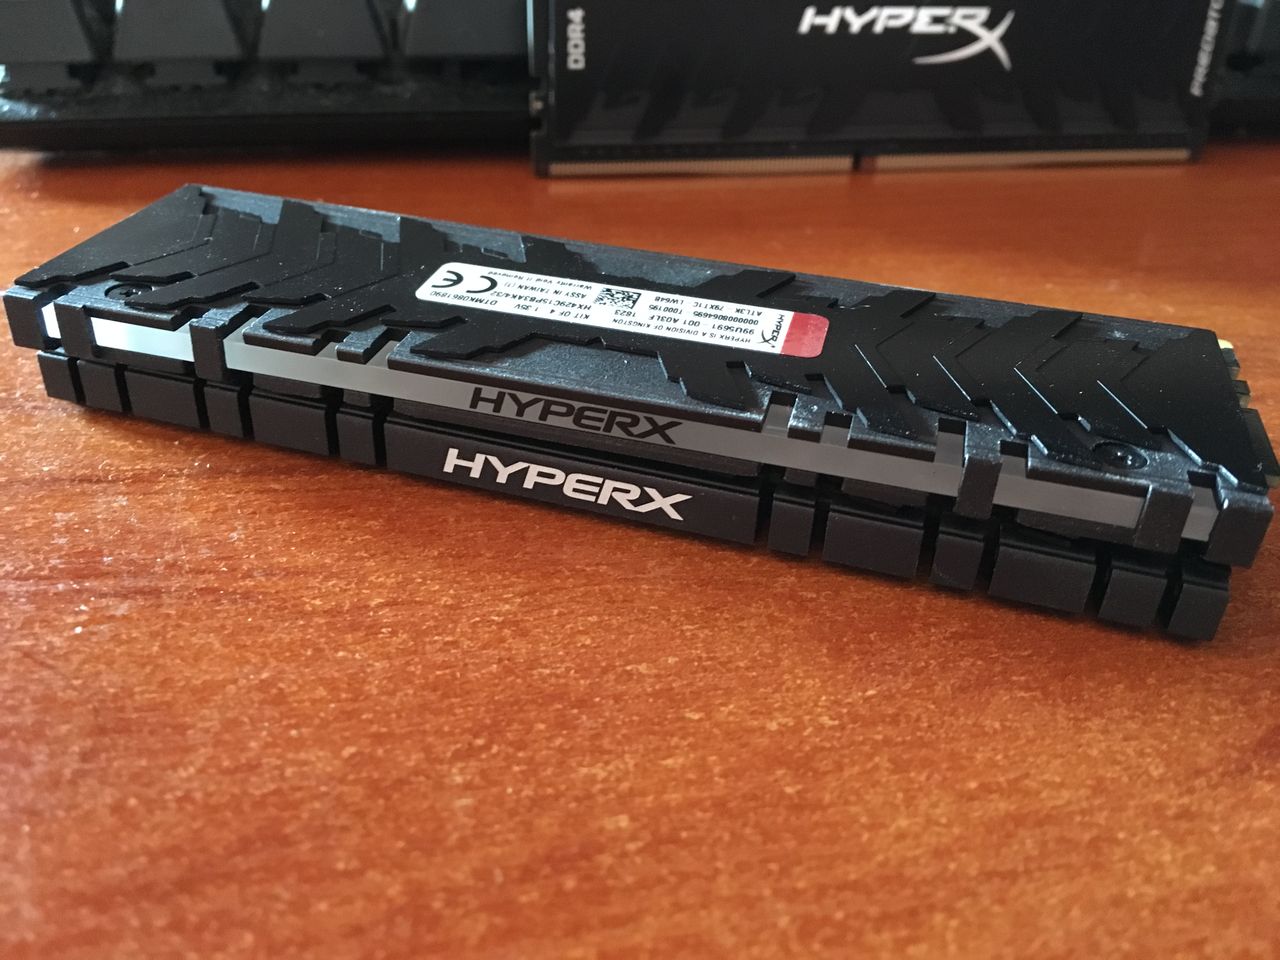 HyperX Predator DDR4 3000 MHz vs HyperX Predator DDR4 2933 MHz RGB